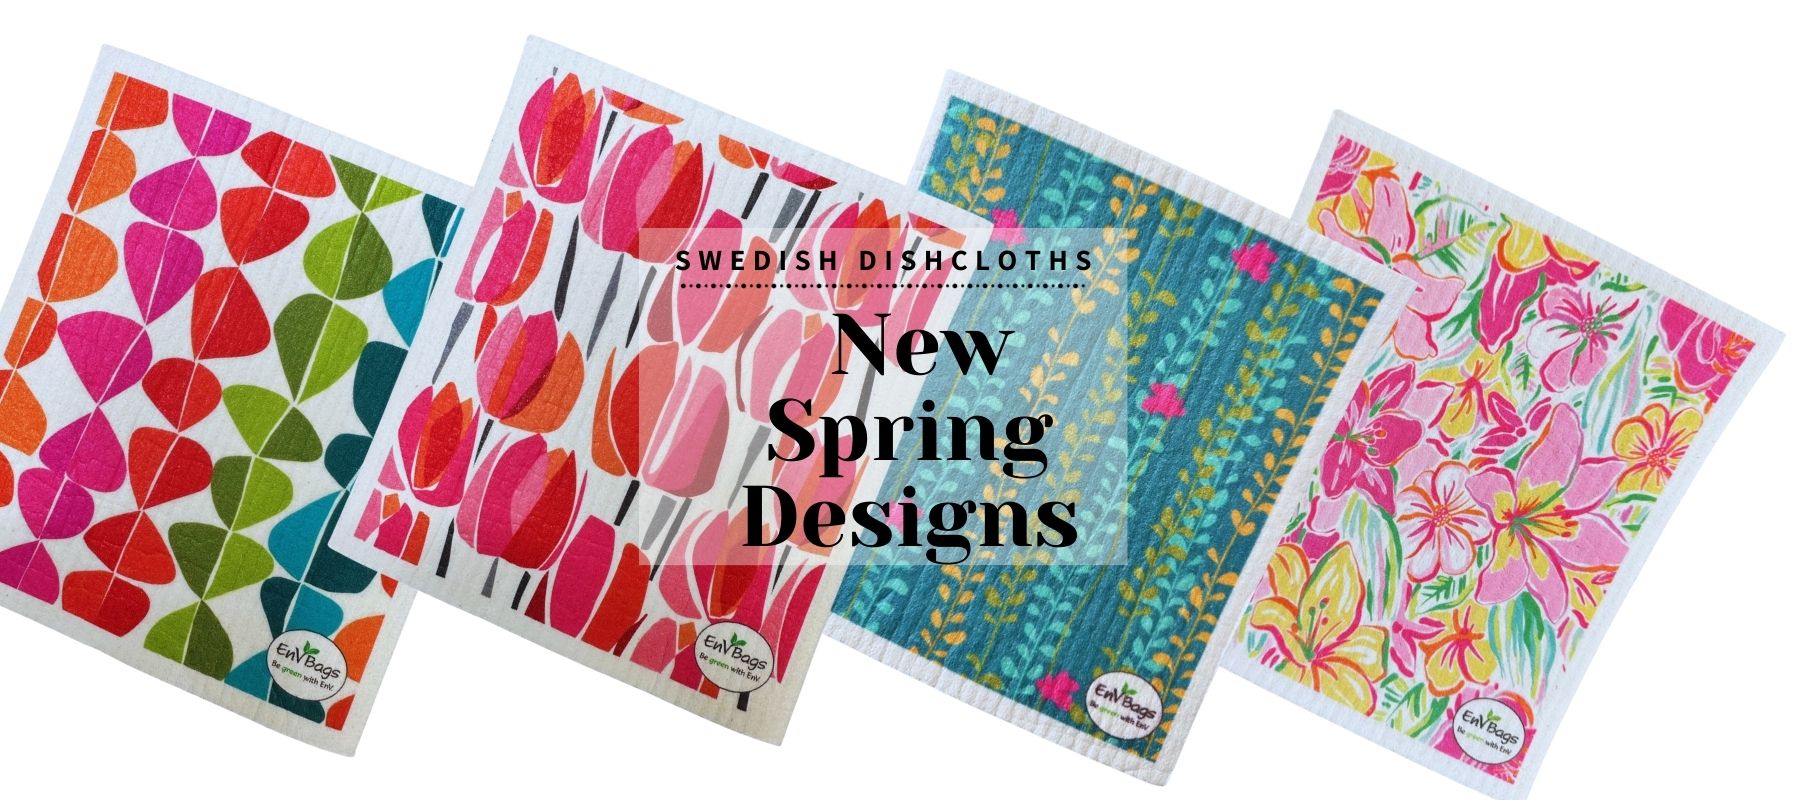 spring designs of new floral dishcloths